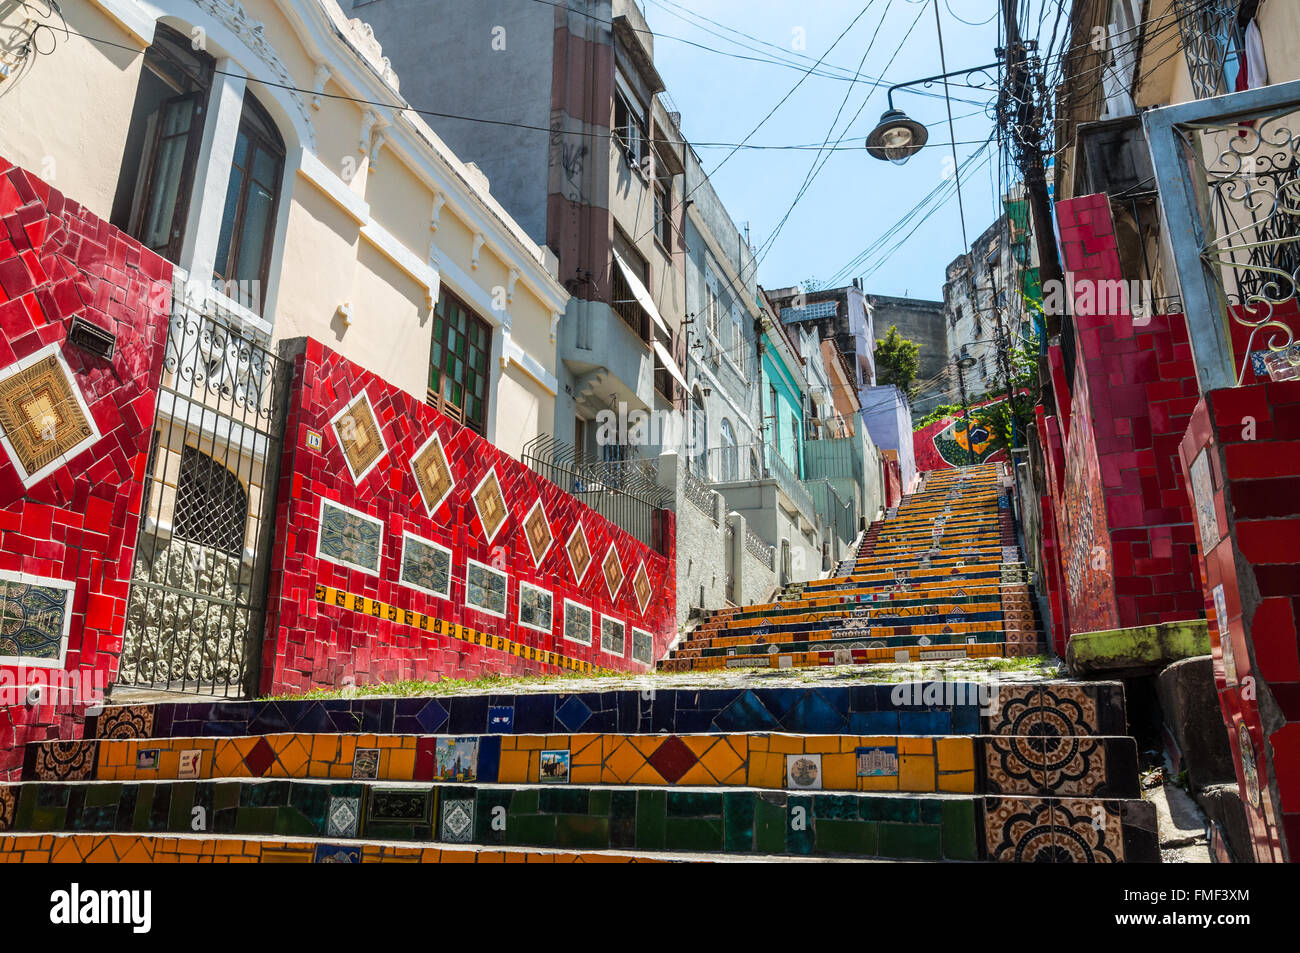 The Landmark of Rio de Janeiro - Selaron Stairs, situated in Lapa, Rio de Janeiro Stock Photo